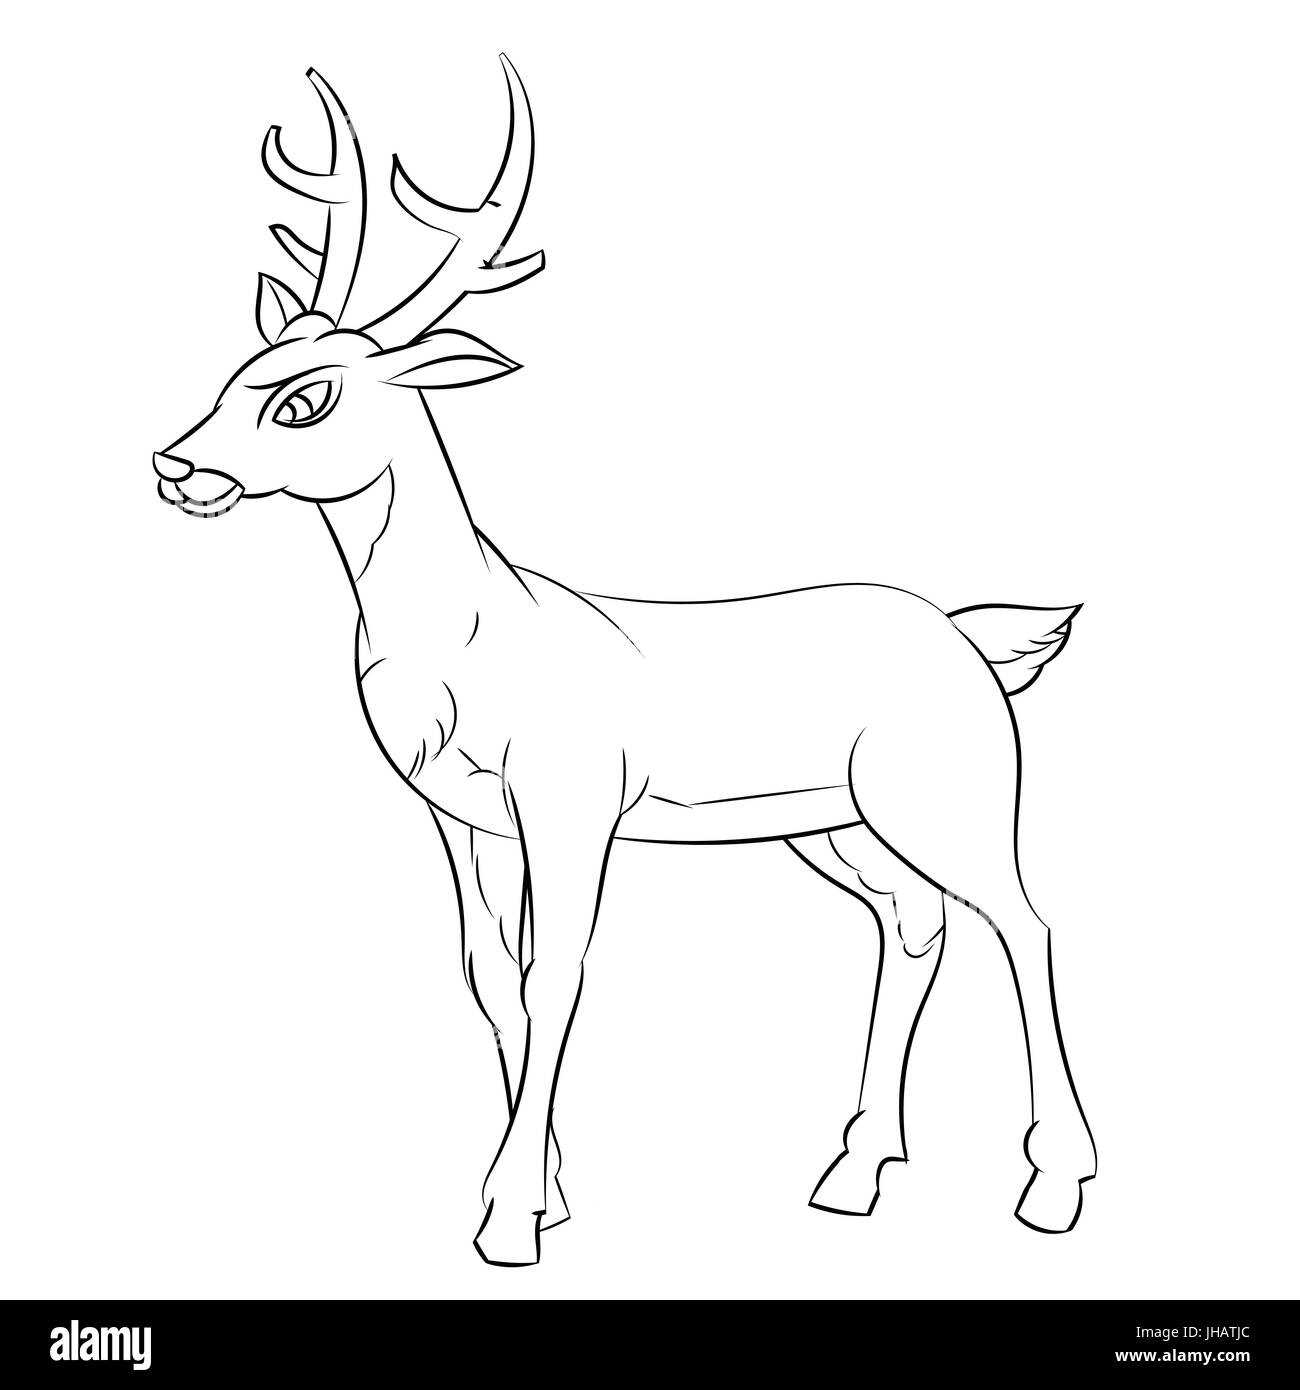 Deer cartoon Black and White Stock Photos & Images - Alamy